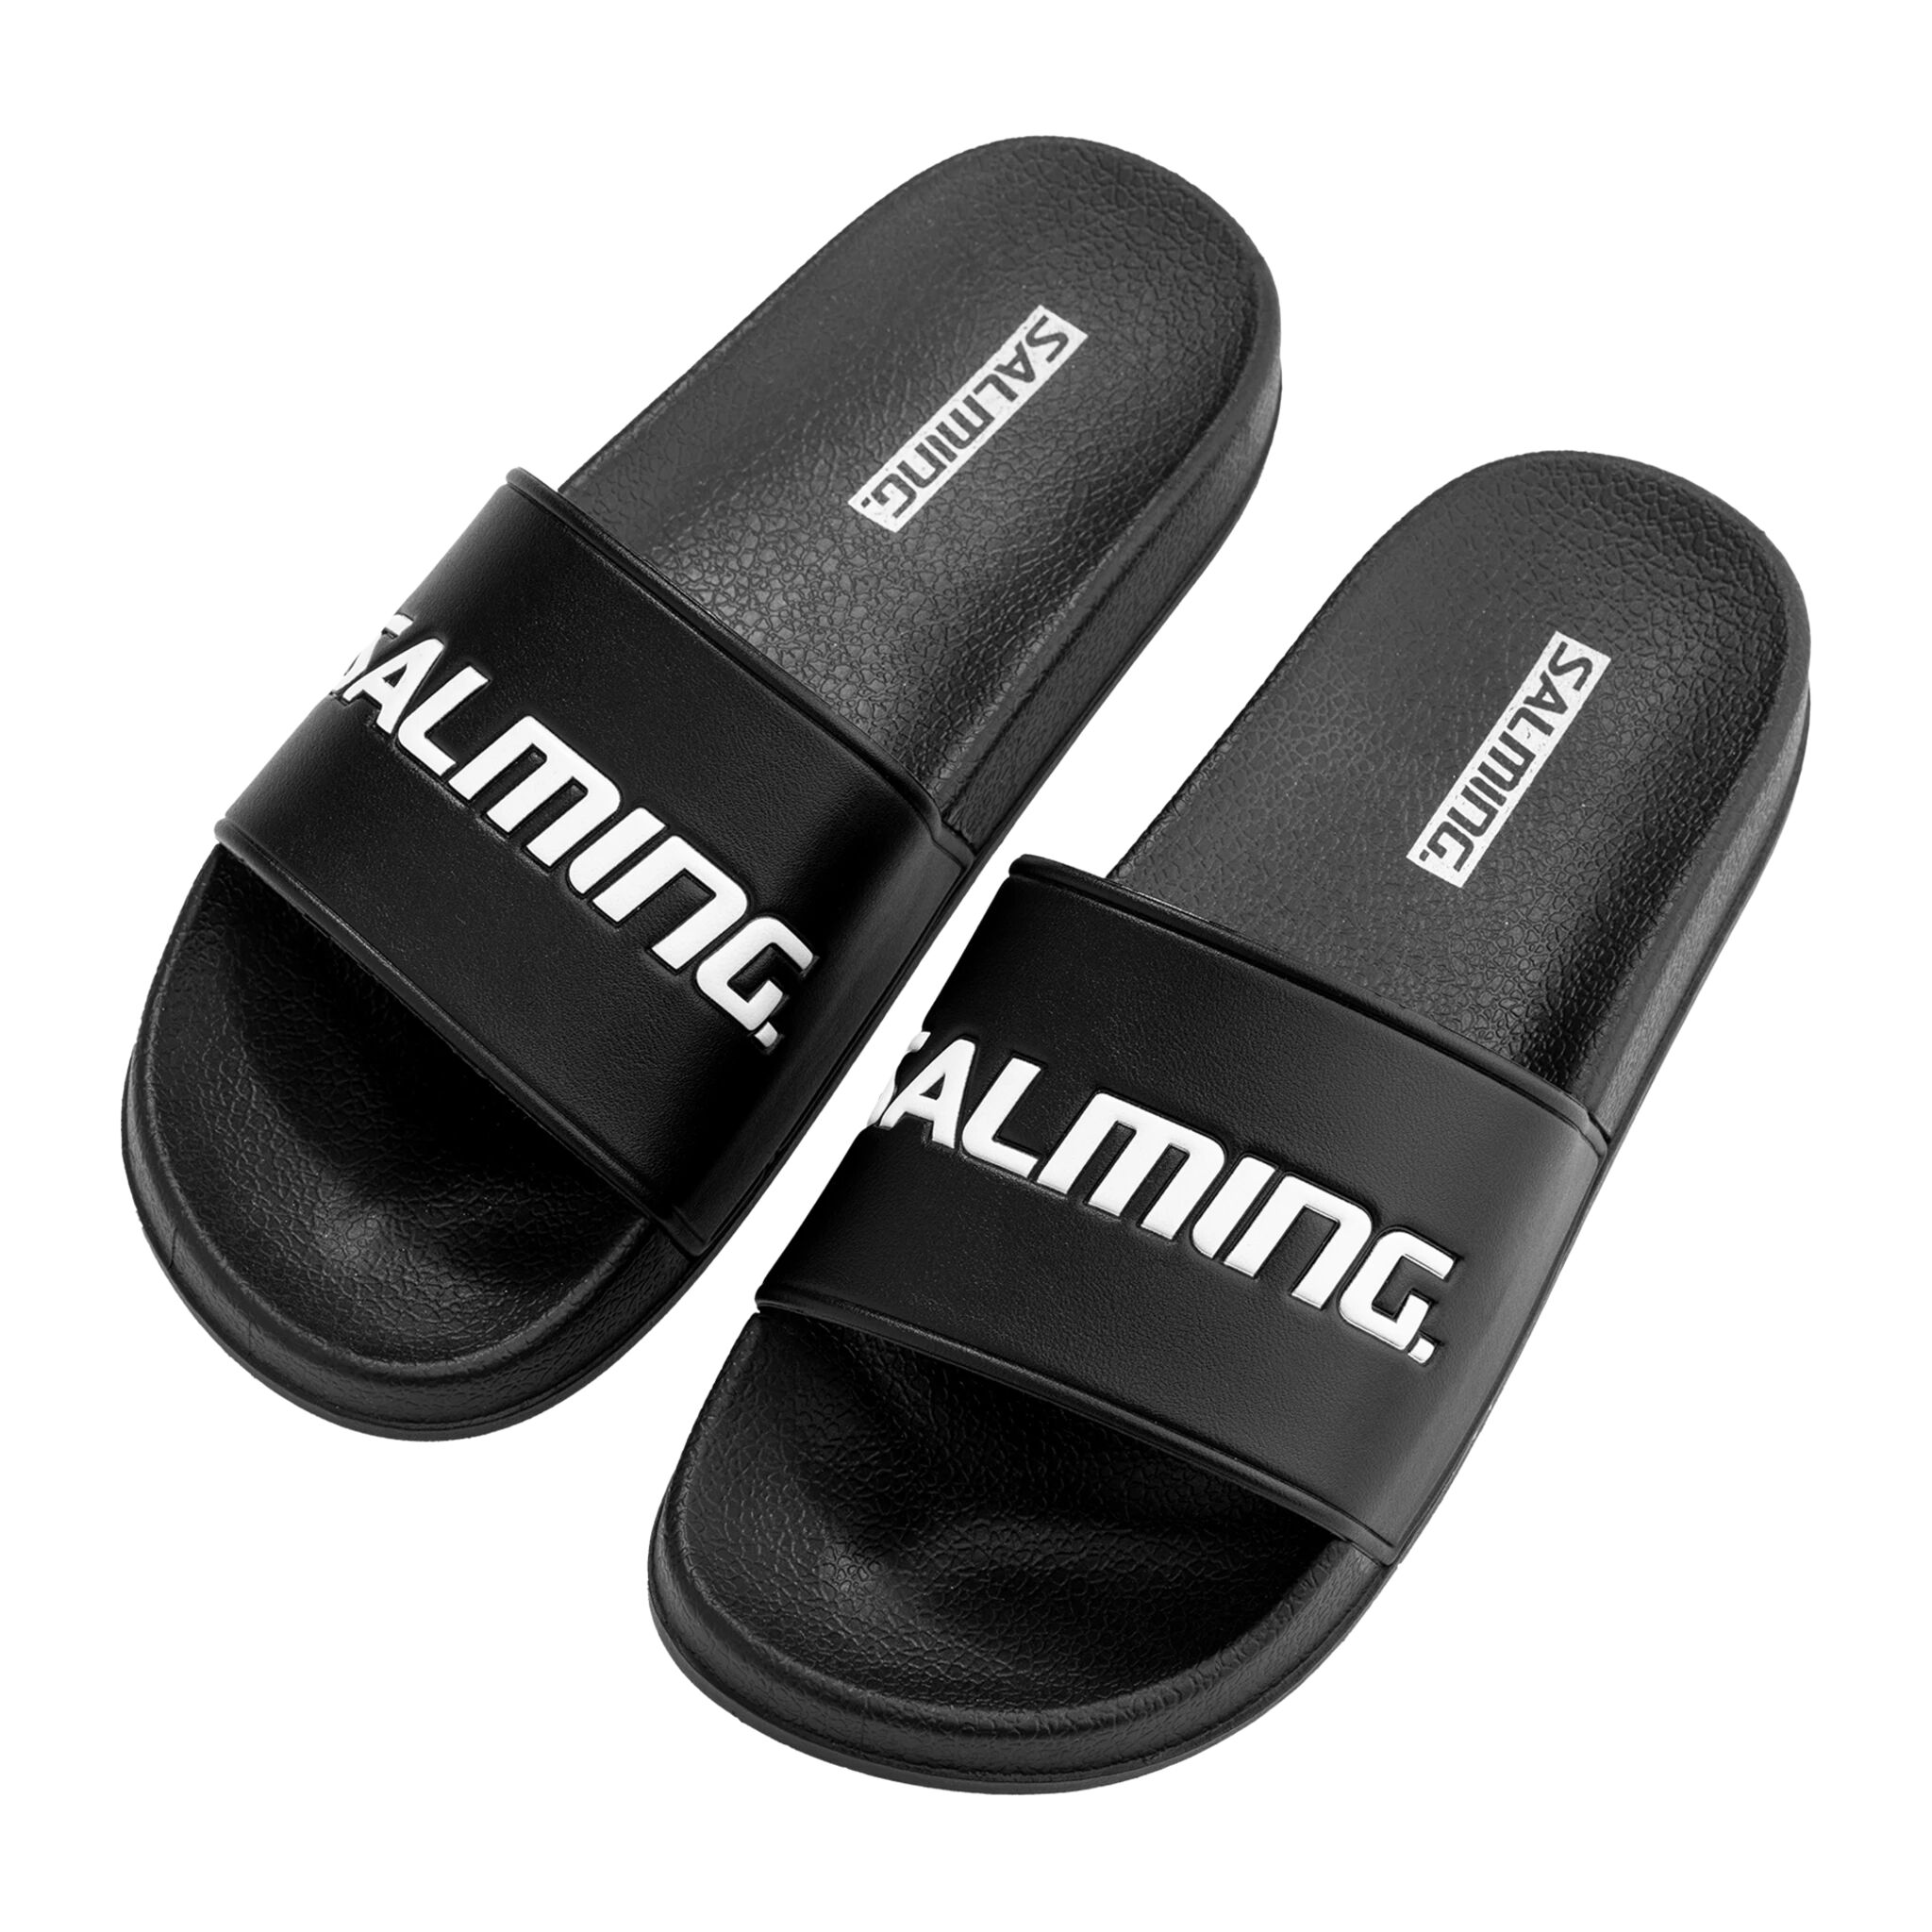 Salming Comfort Shower Sandal JR/SR-21/22, slippers 40/41 BLACK